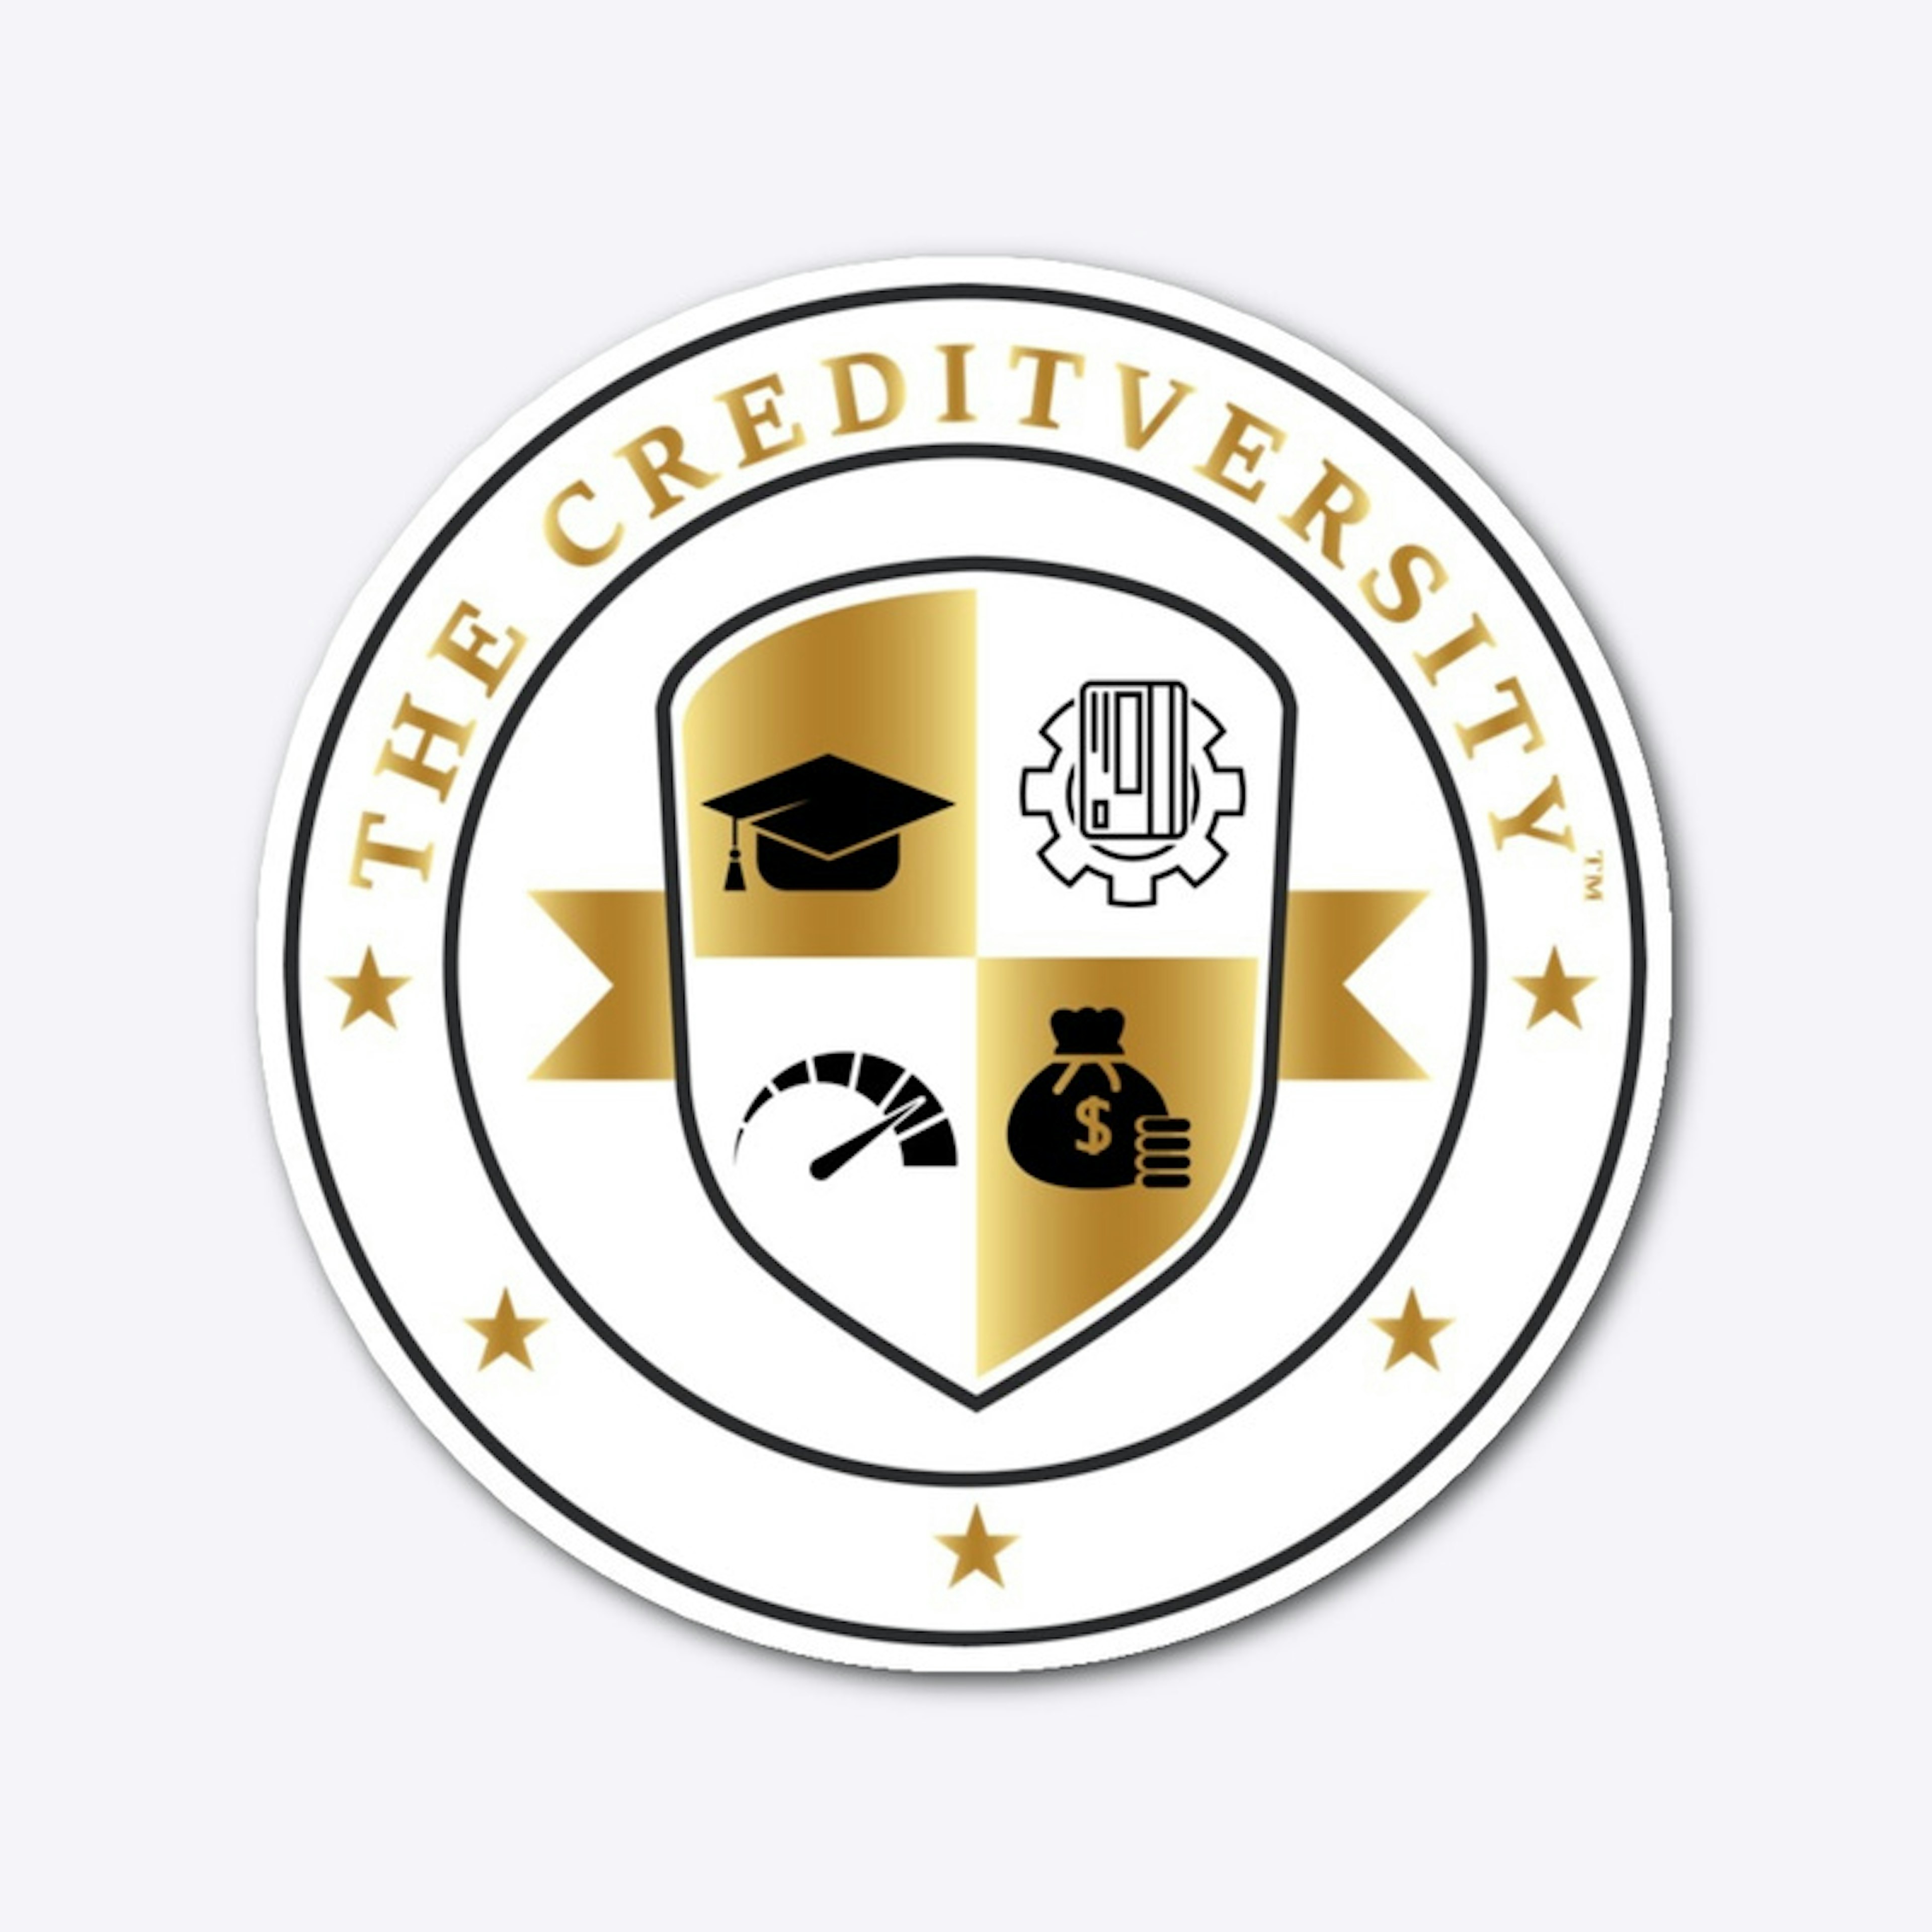 The Creditversity™ Sticker